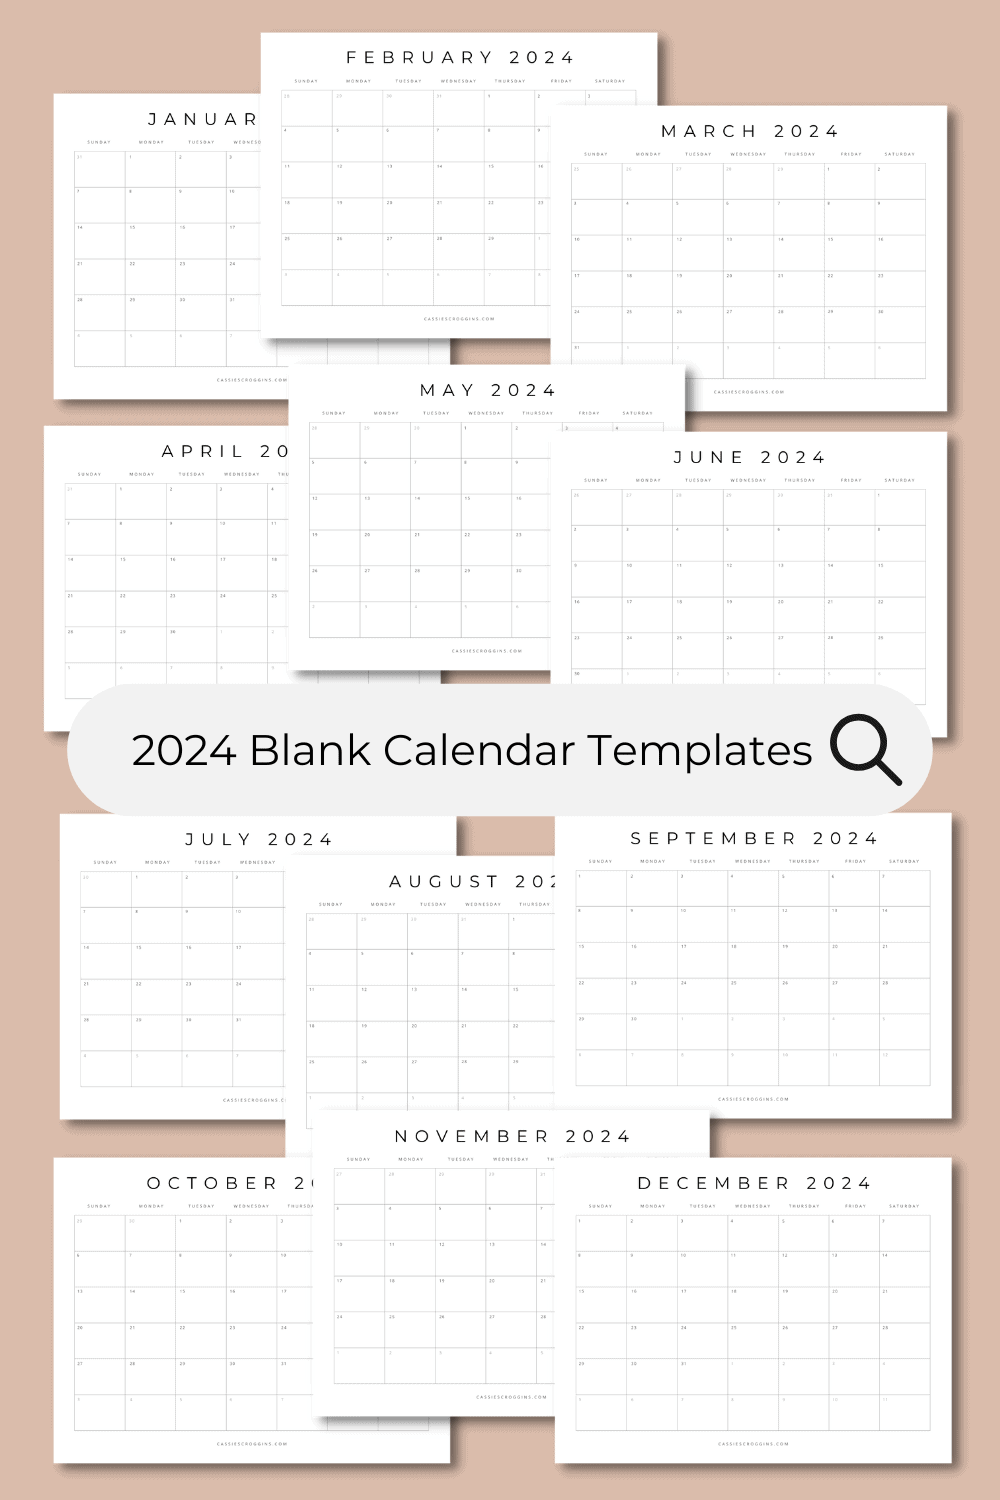 Free Printable 2024 Blank Calendar Templates (All 12 Months) pertaining to Free Printable Calendar 2024 I Can Write On